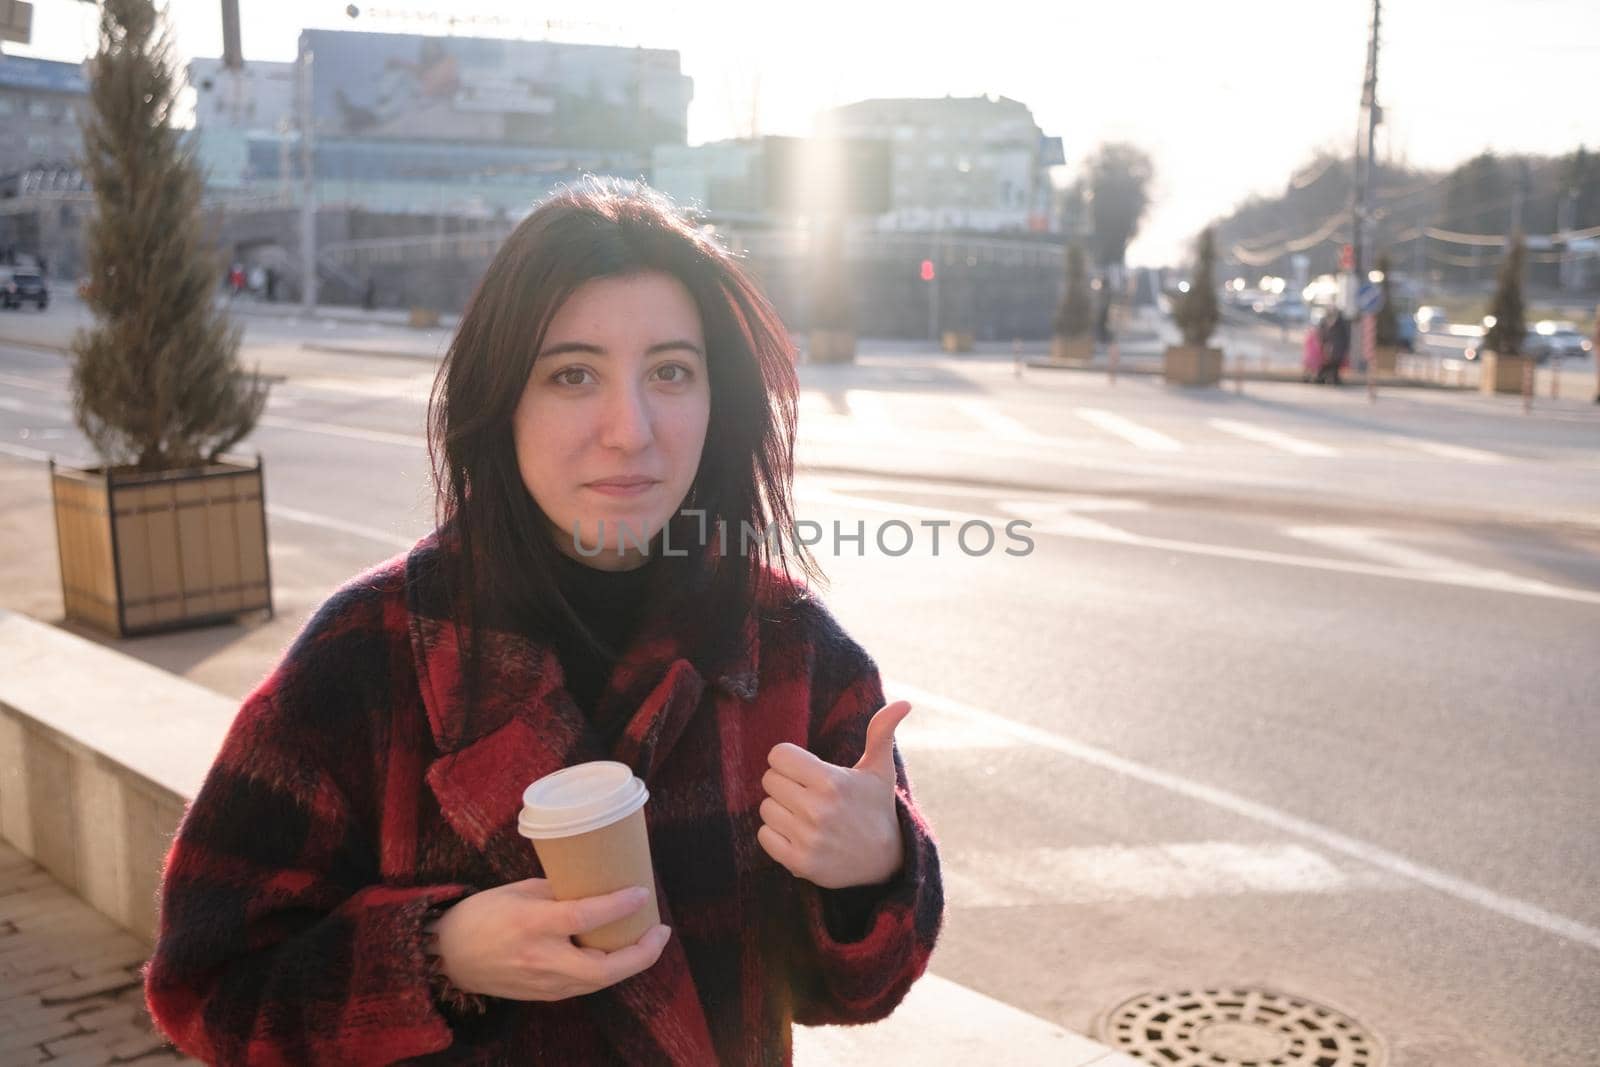 Woman drinking coffee in the sun, outdoor in sunlight light, enjoying her morning